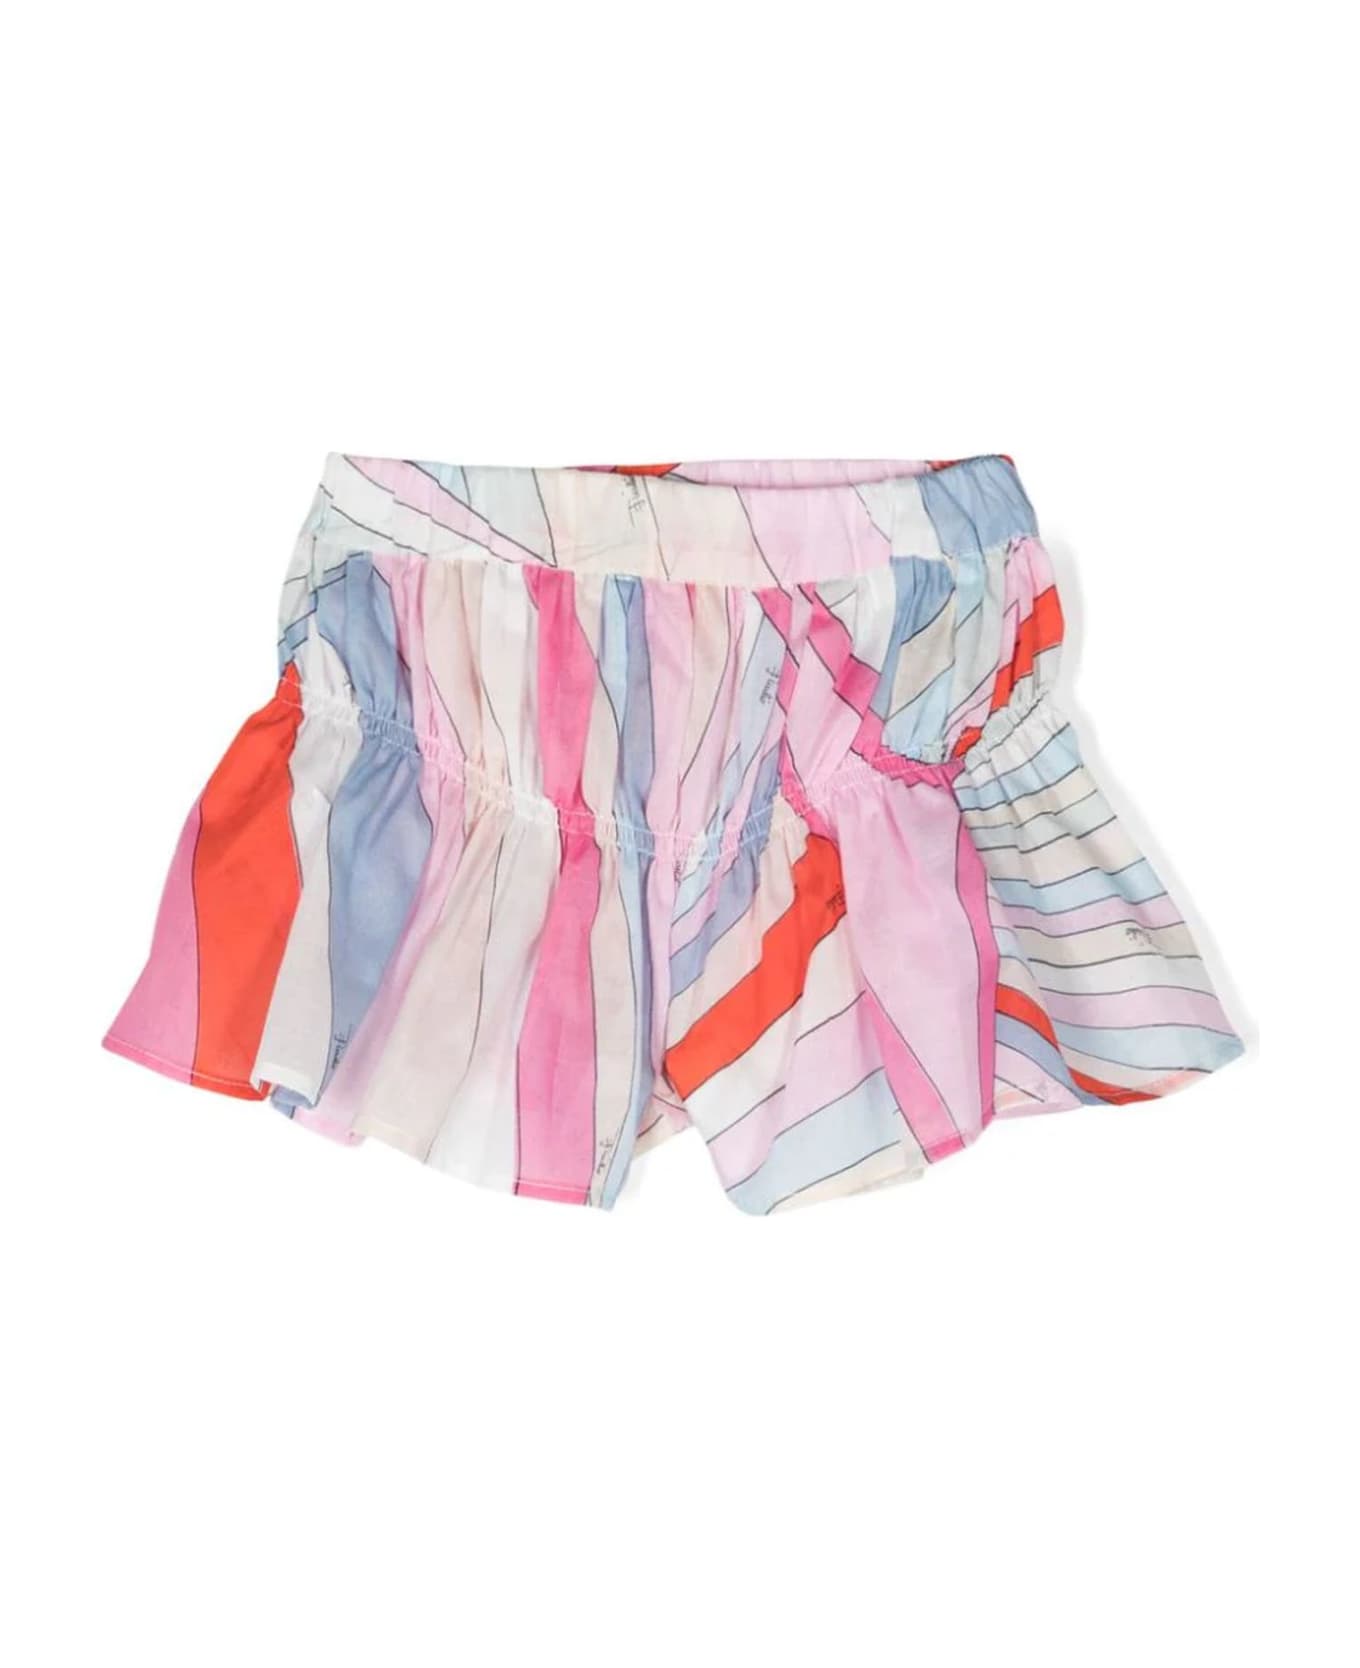 Pucci Emilio Pucci Shorts Pink - Pink